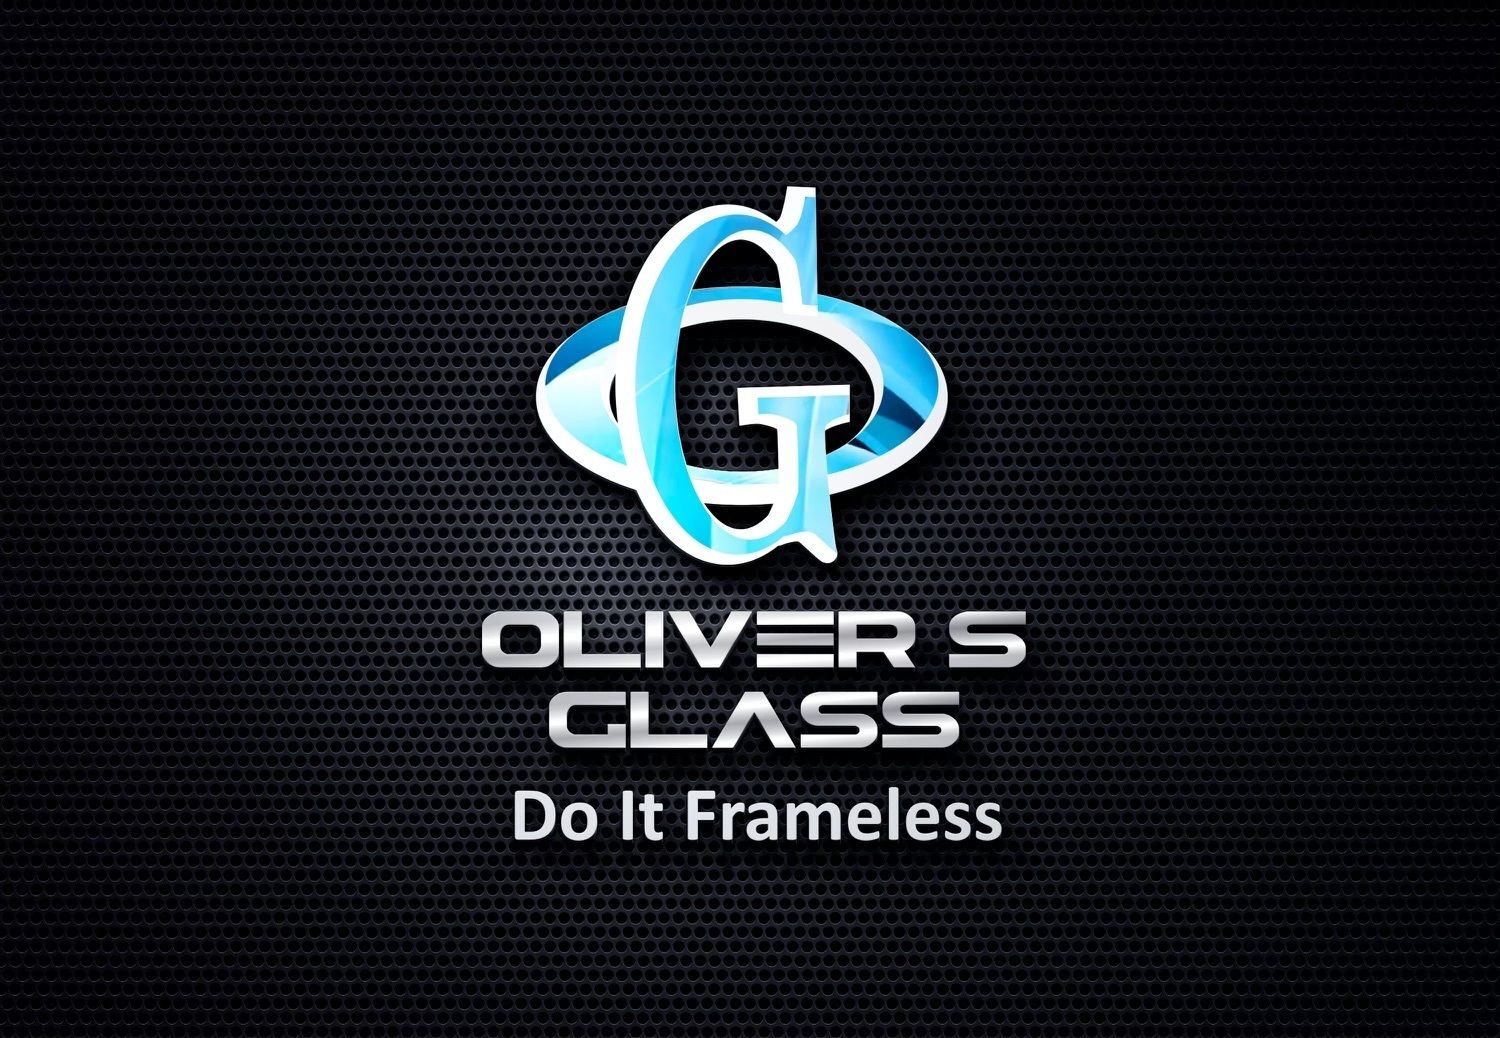 Oliver's Glass